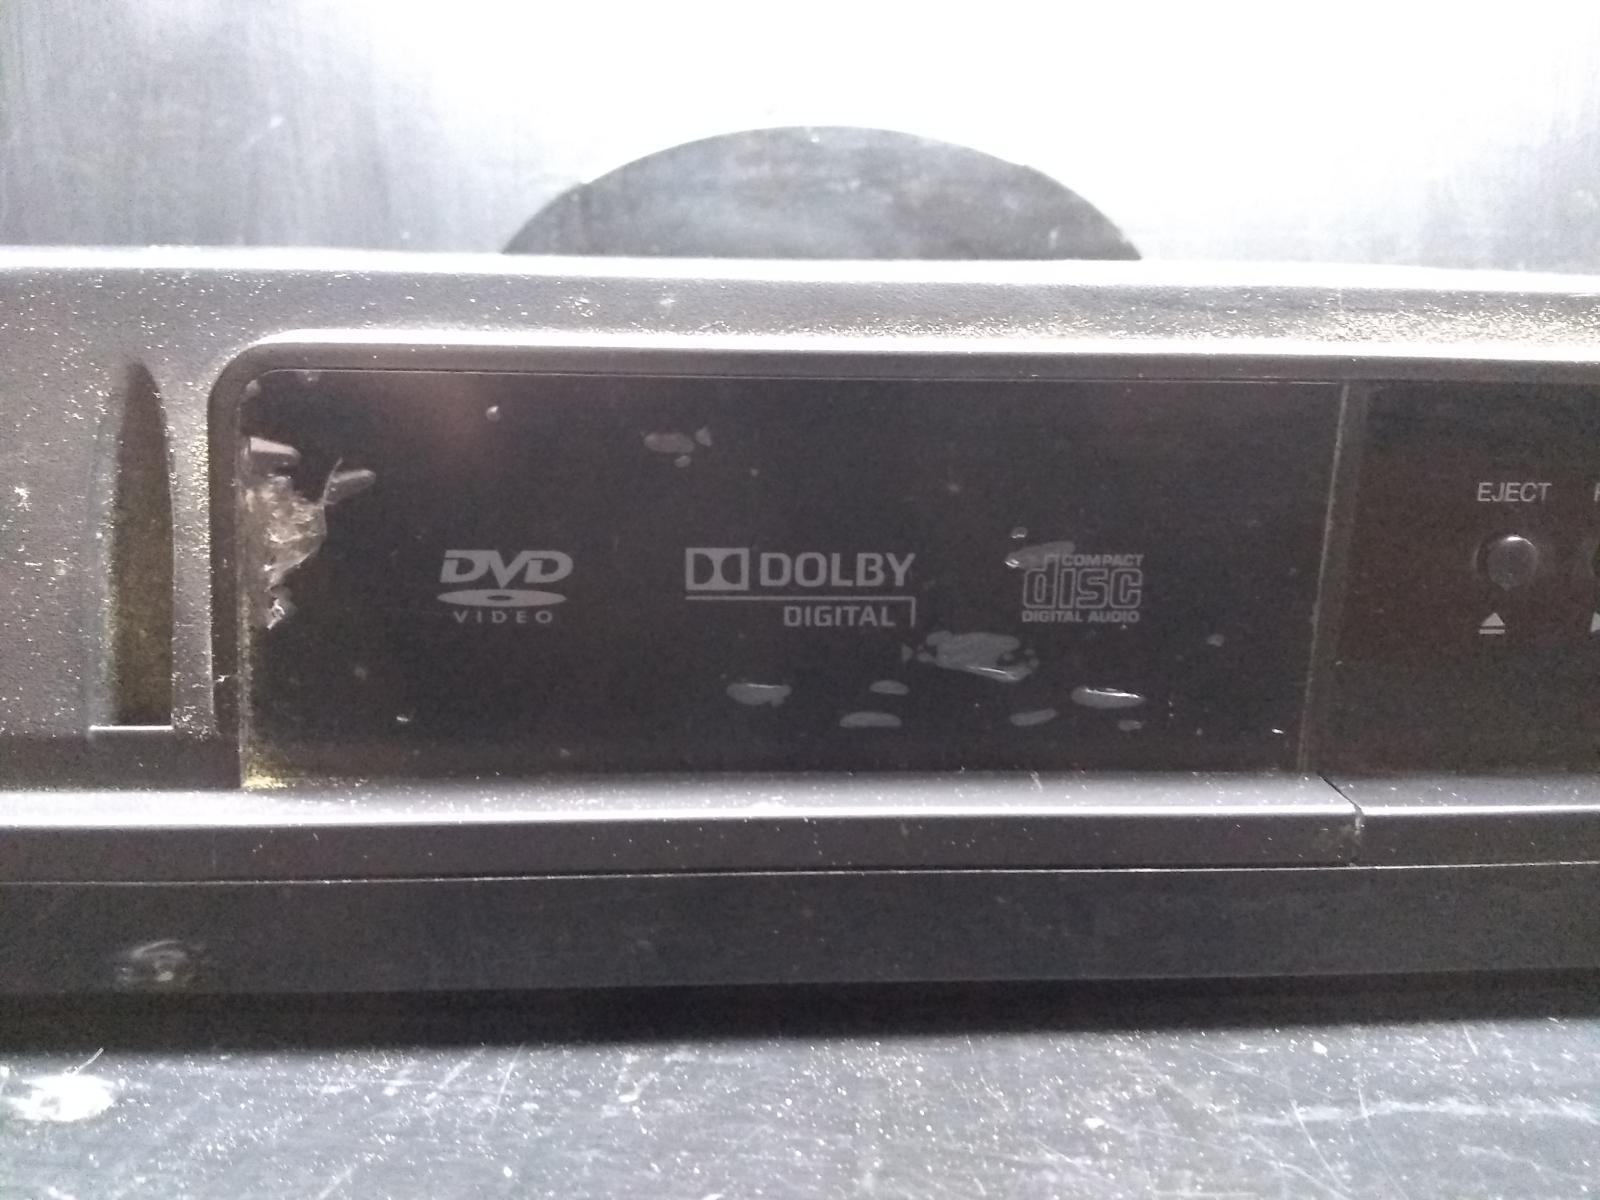 Polaroid 19" LCD TV/DVD Combo Model # TDAC-01933